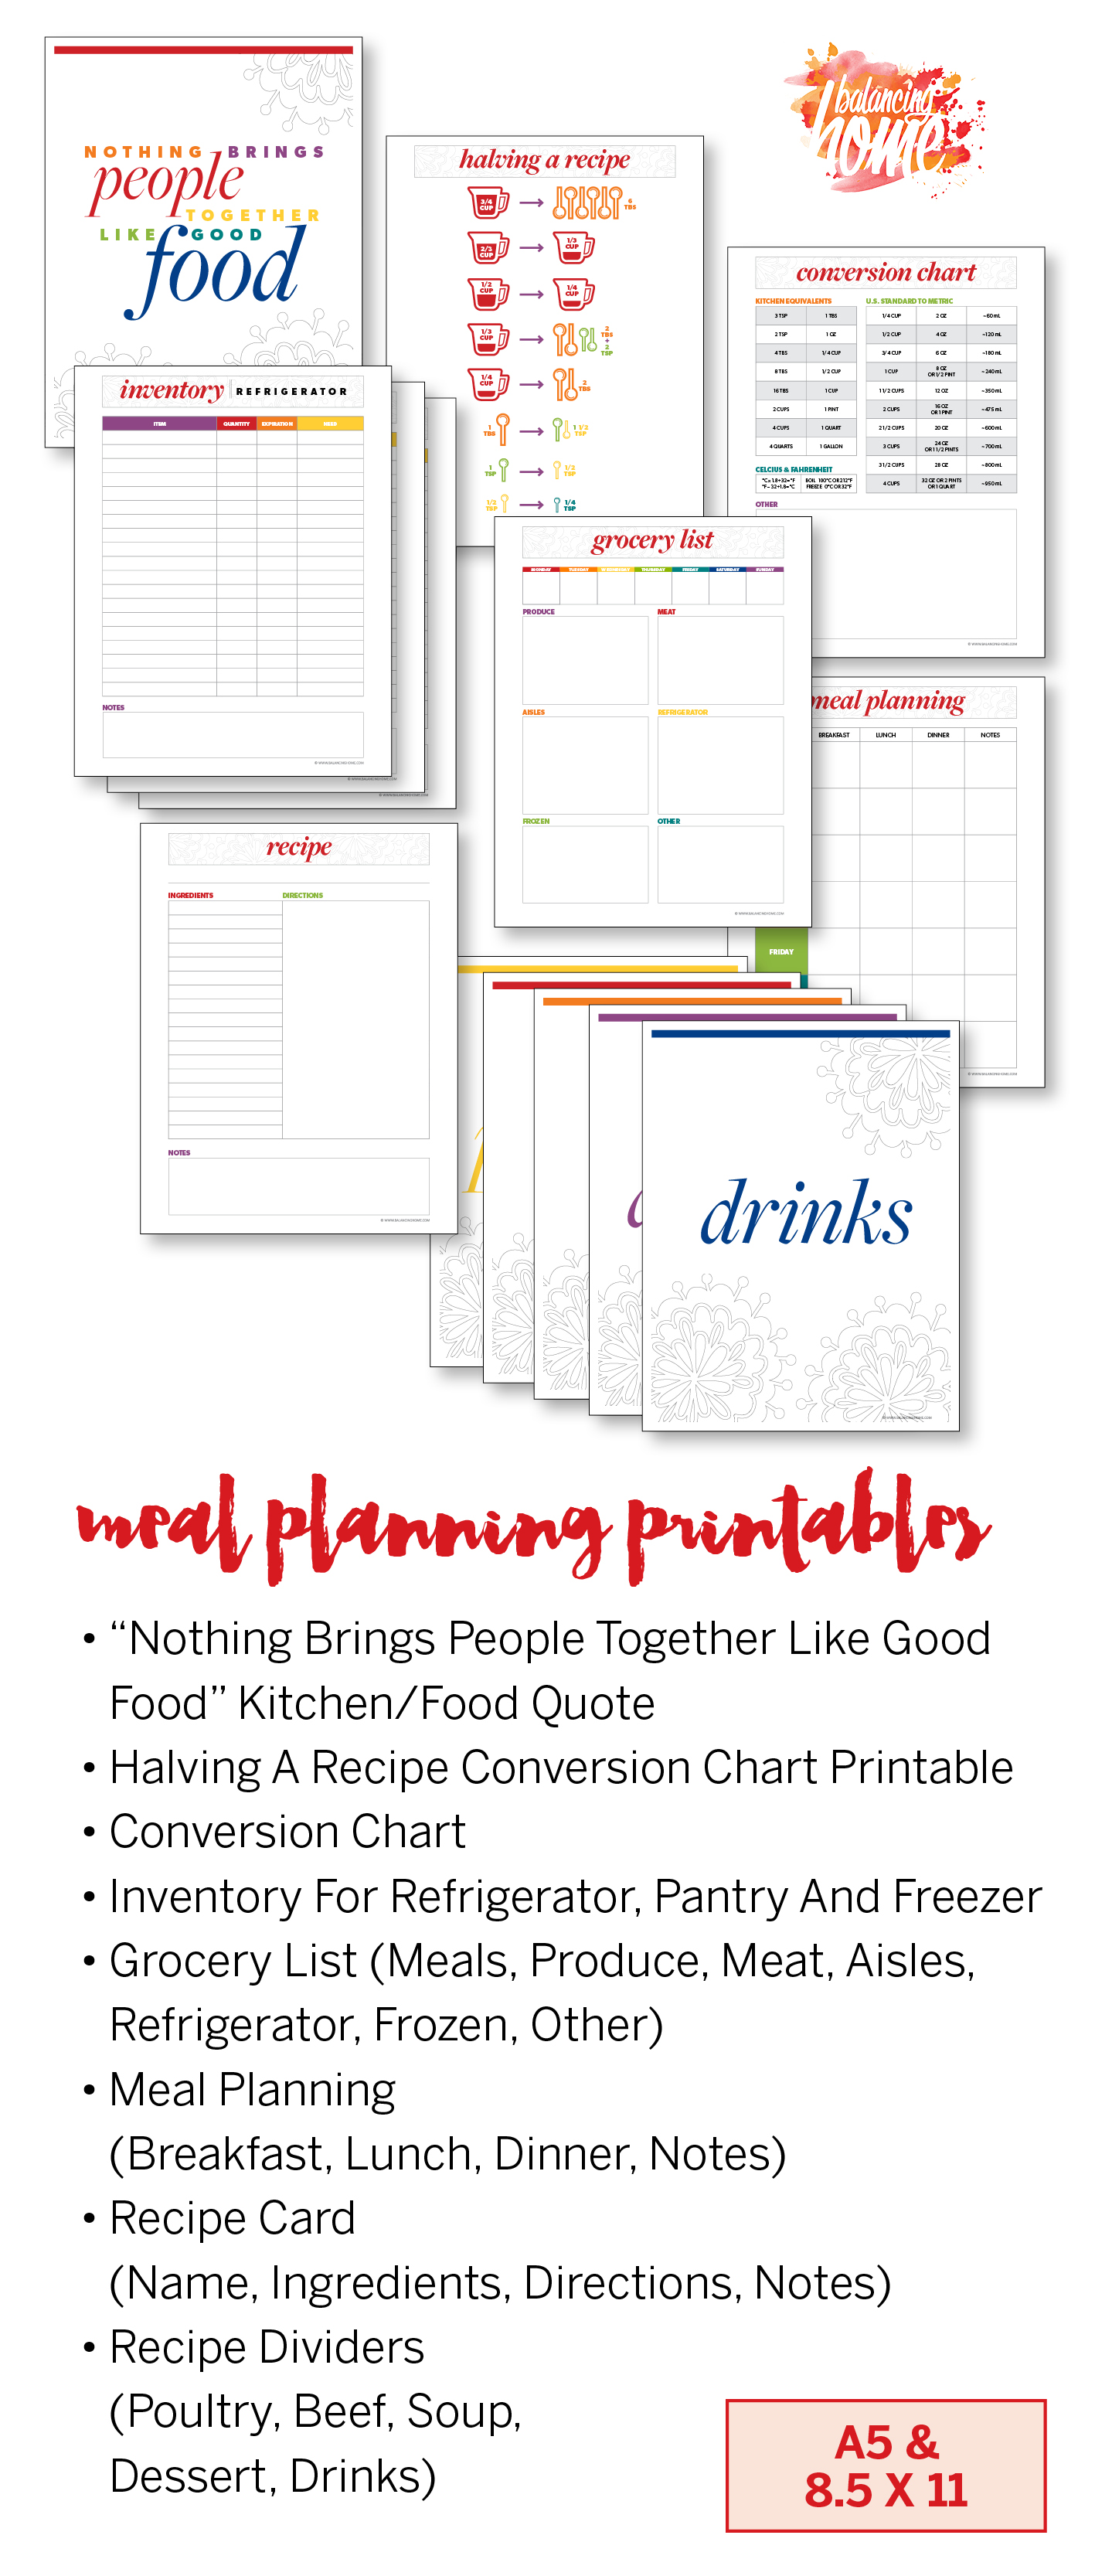 Recipe binder printables, meal planning printables, grocery list, etc.